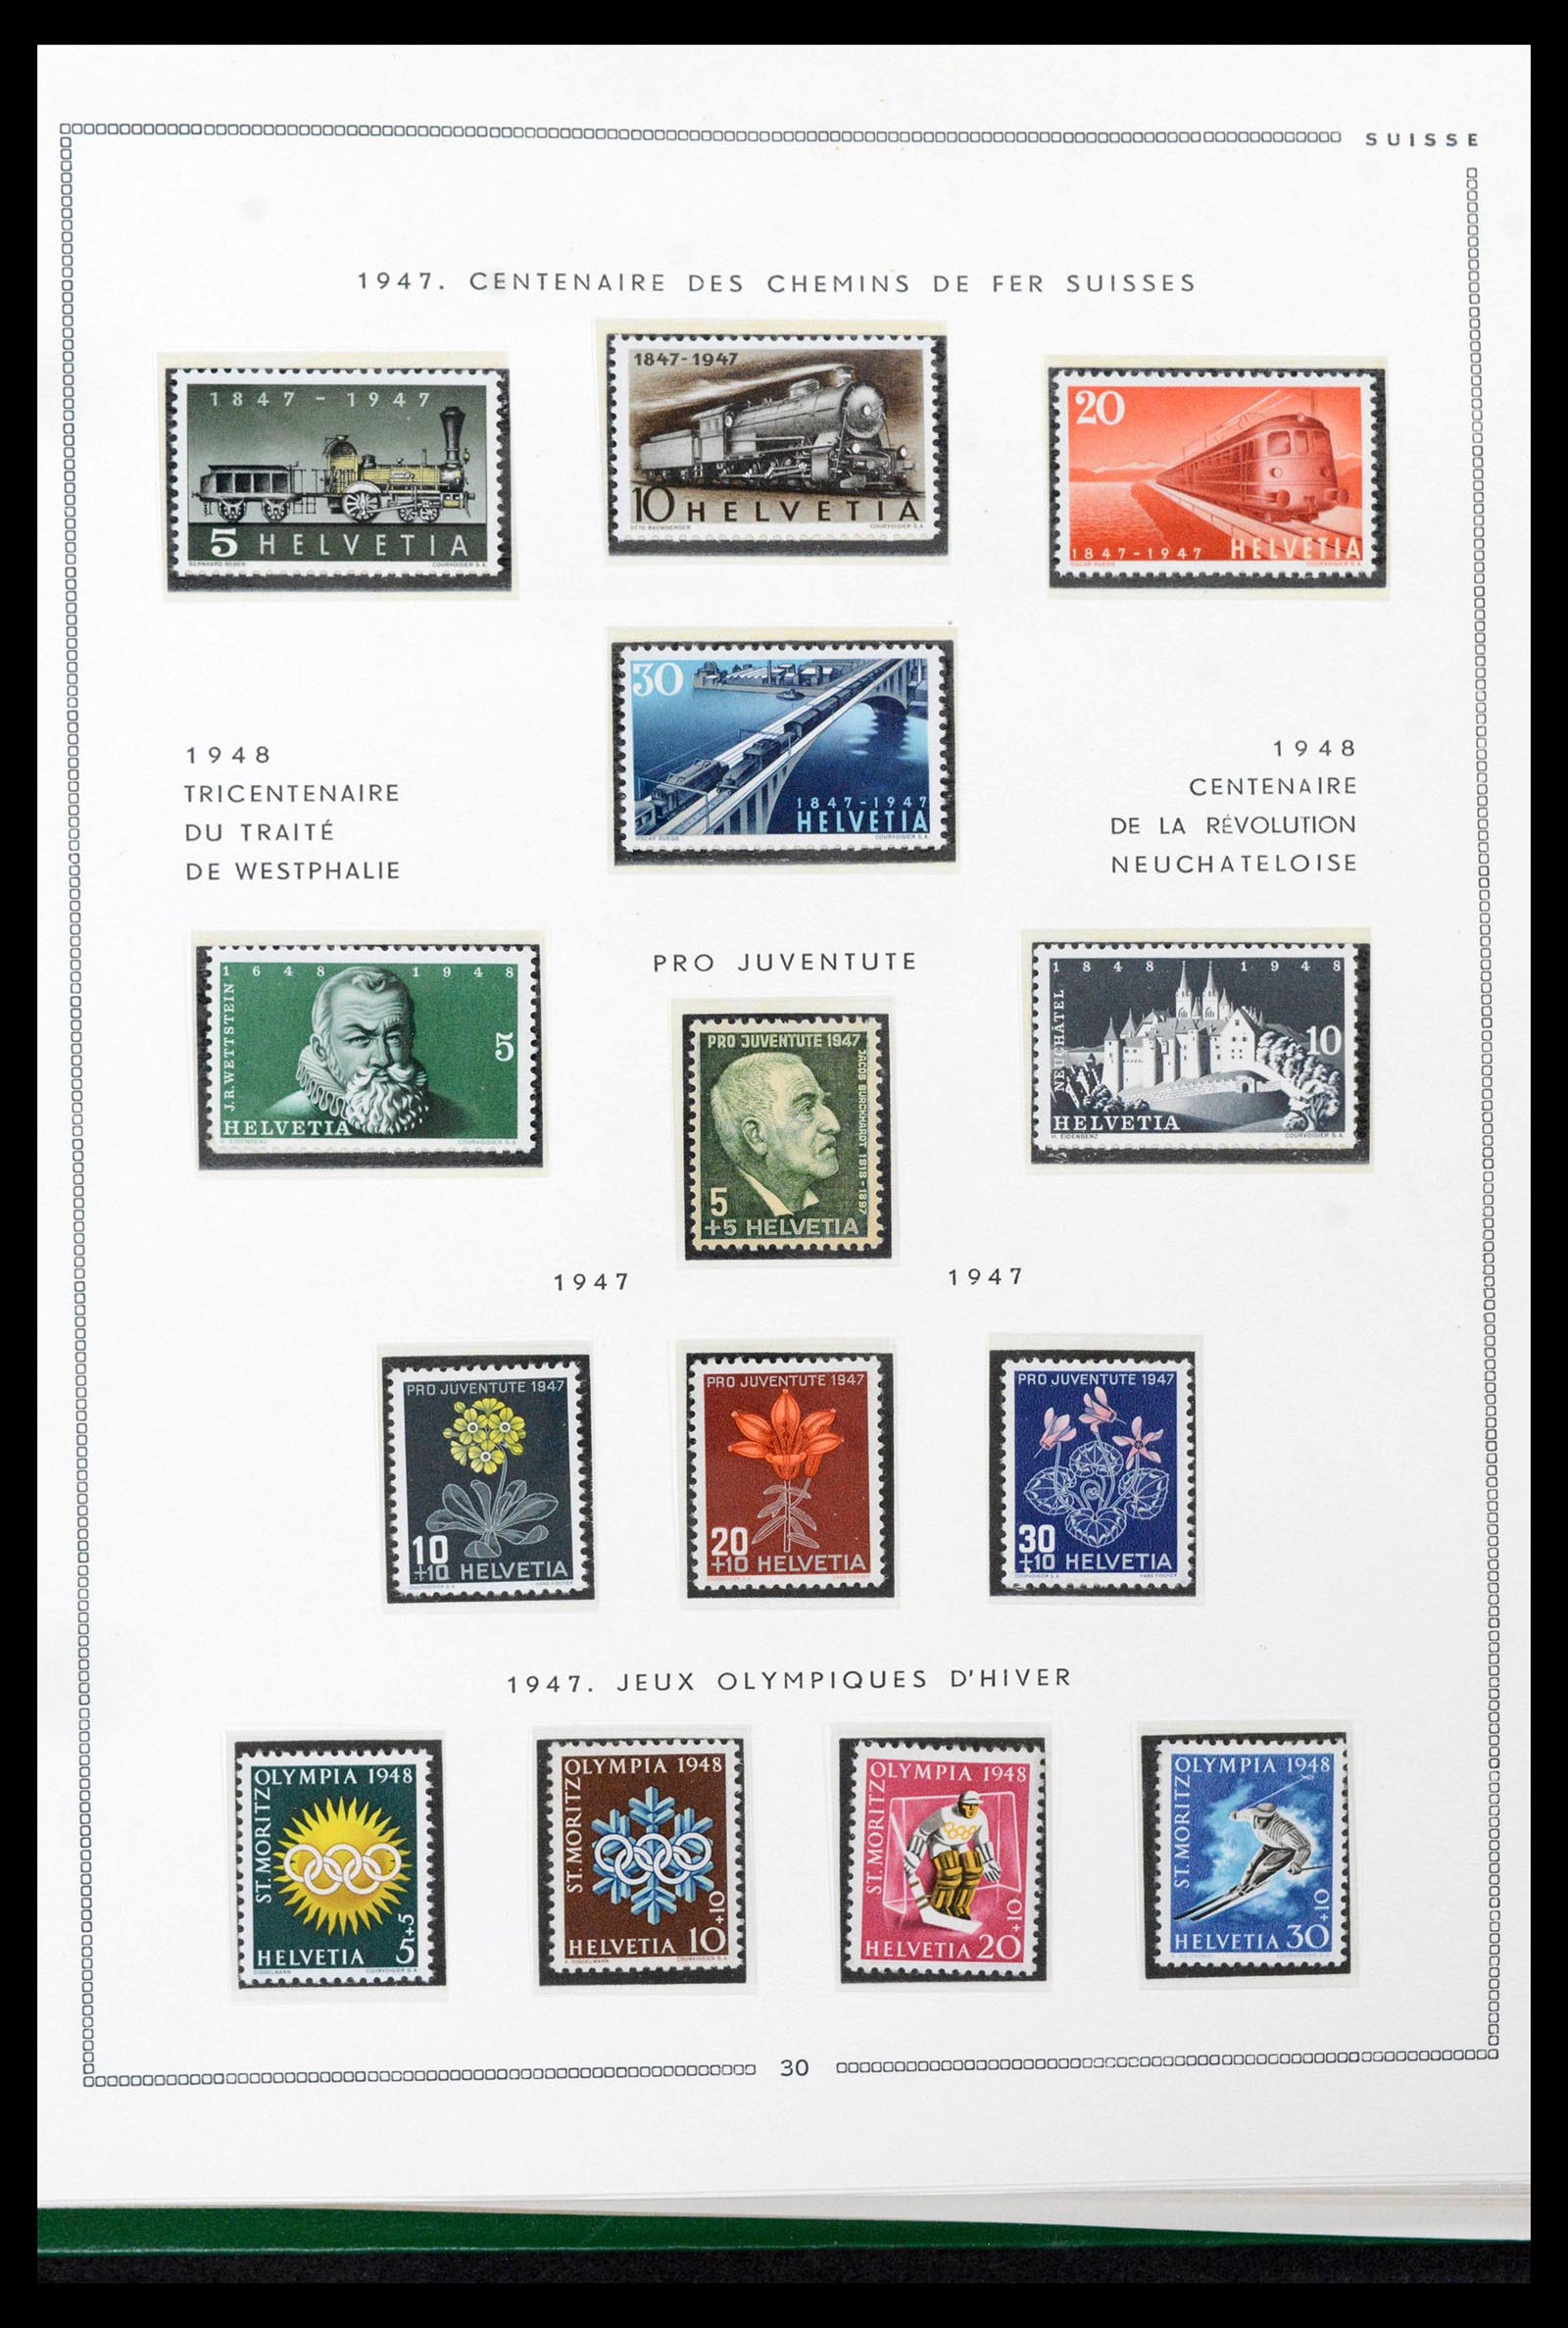 39096 0025 - Stamp collection 39096 Switzerland 1907-1963.